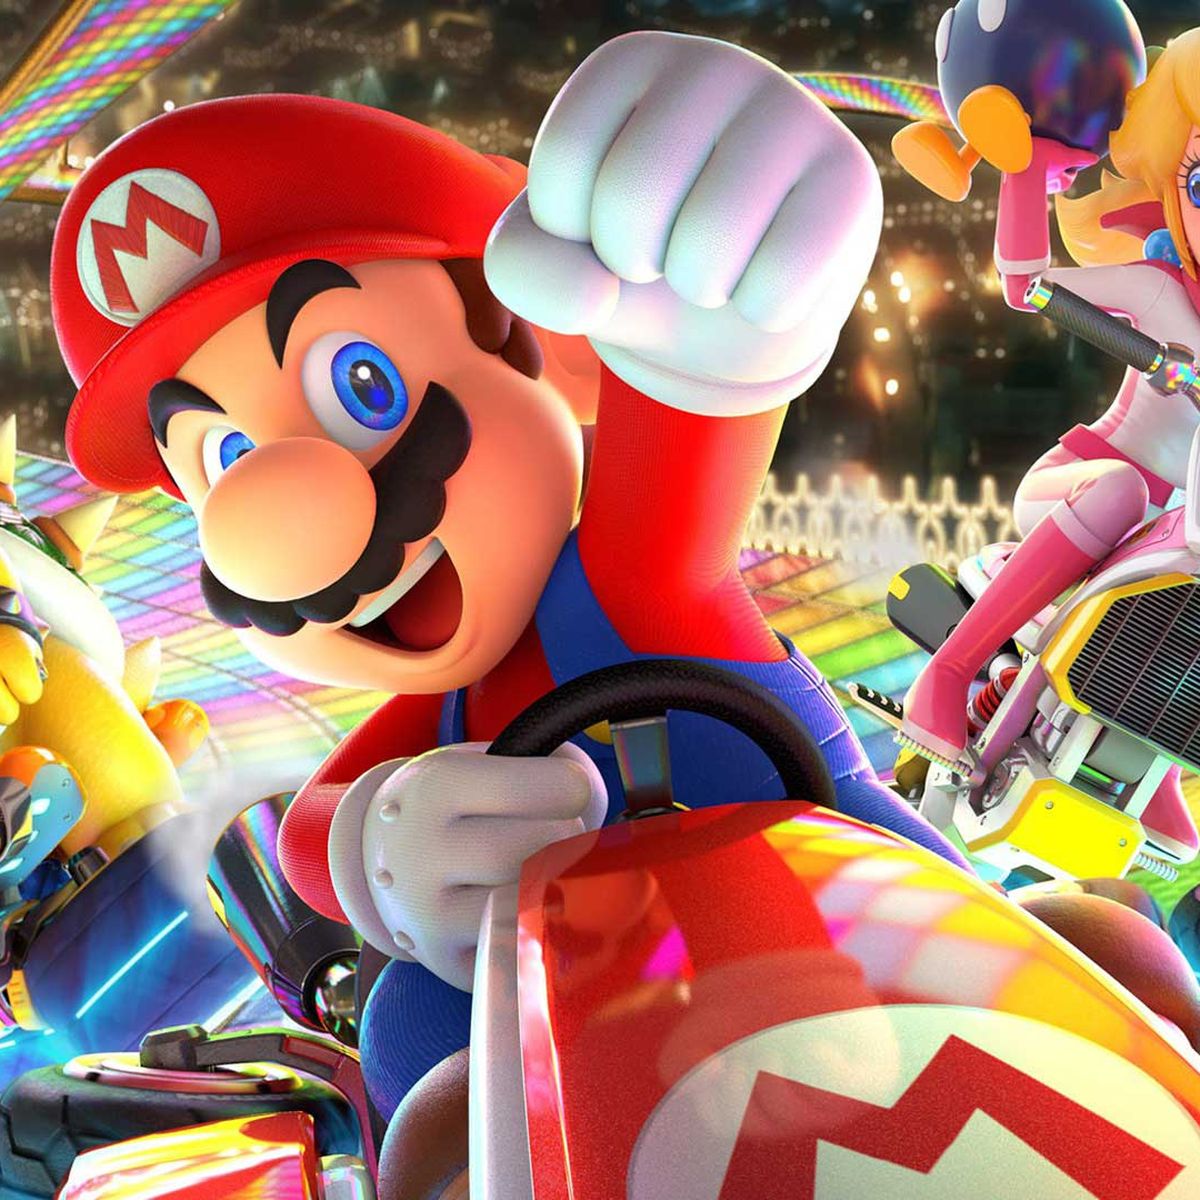 Carrera Nintendo Mario Kart 8 - TECIN HOLDING – TECIN HOLDING